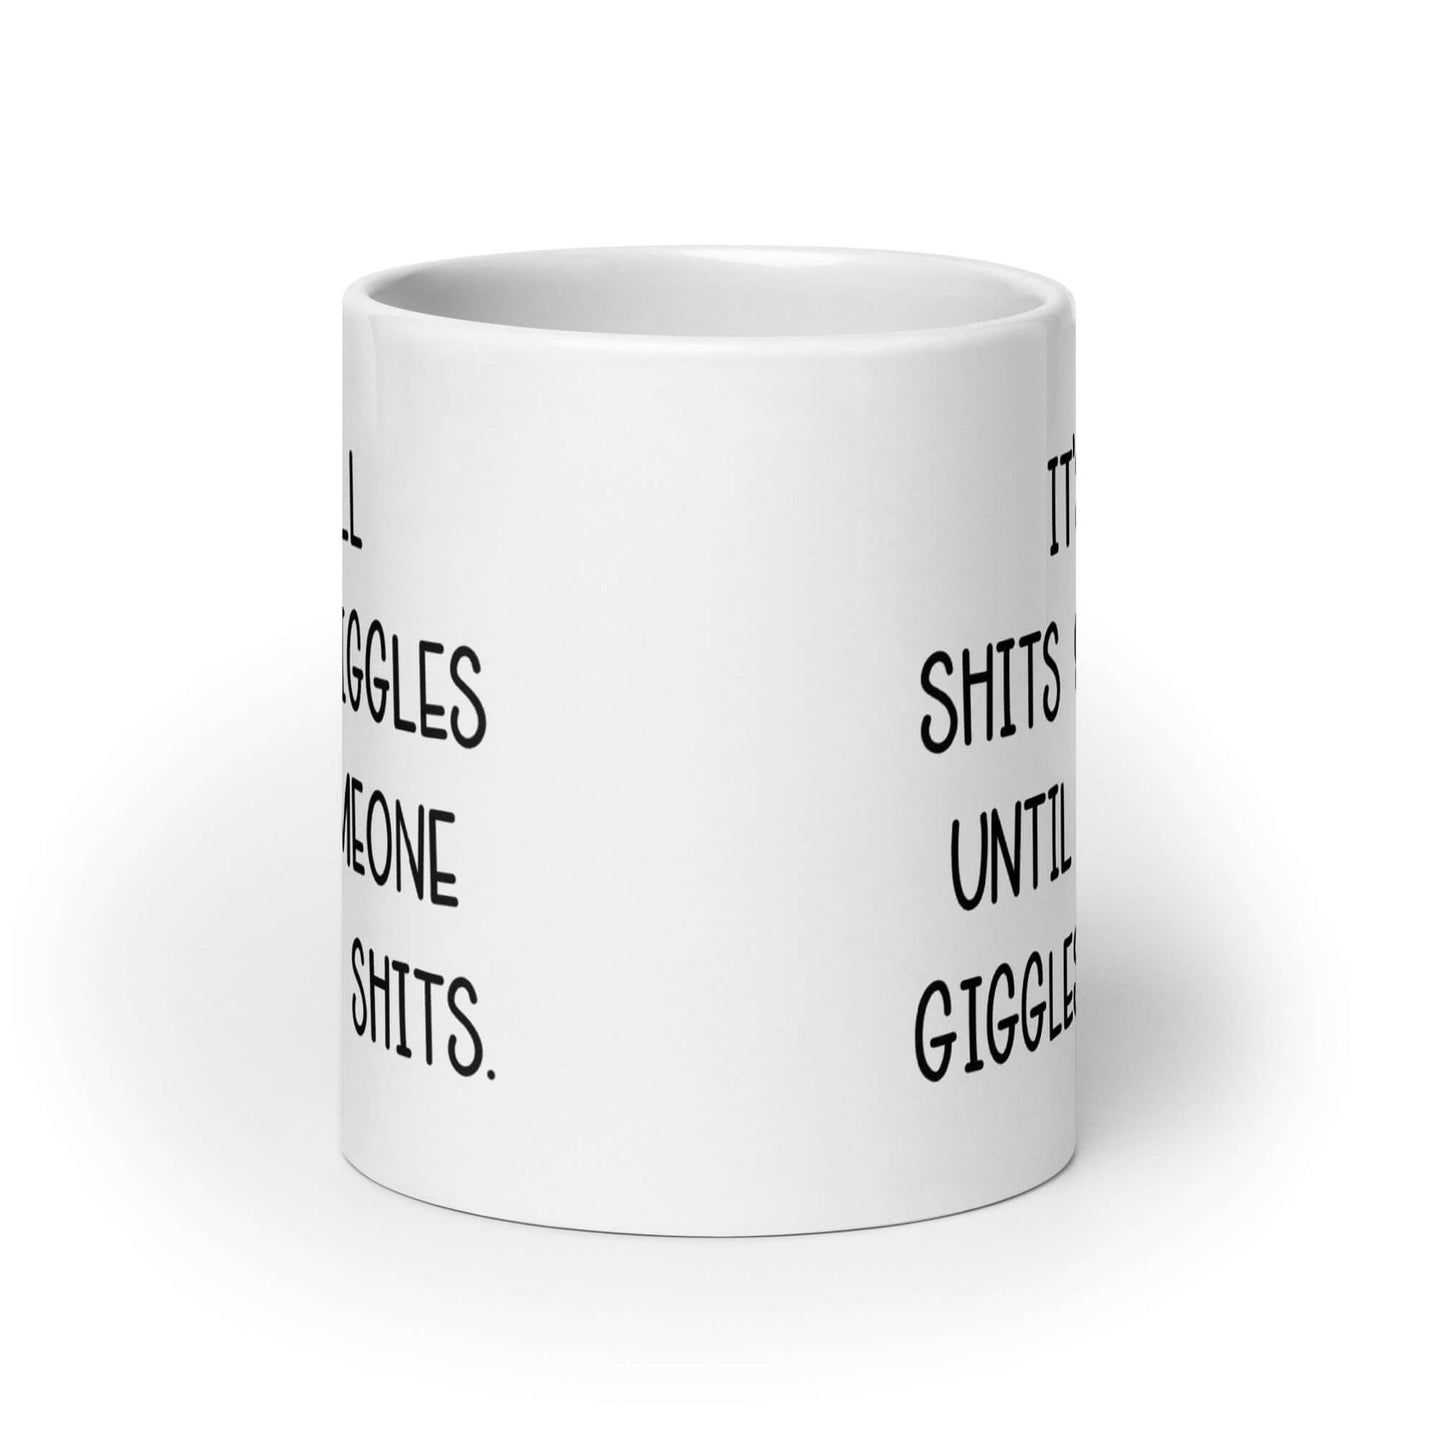 Shits & giggles ceramic mug